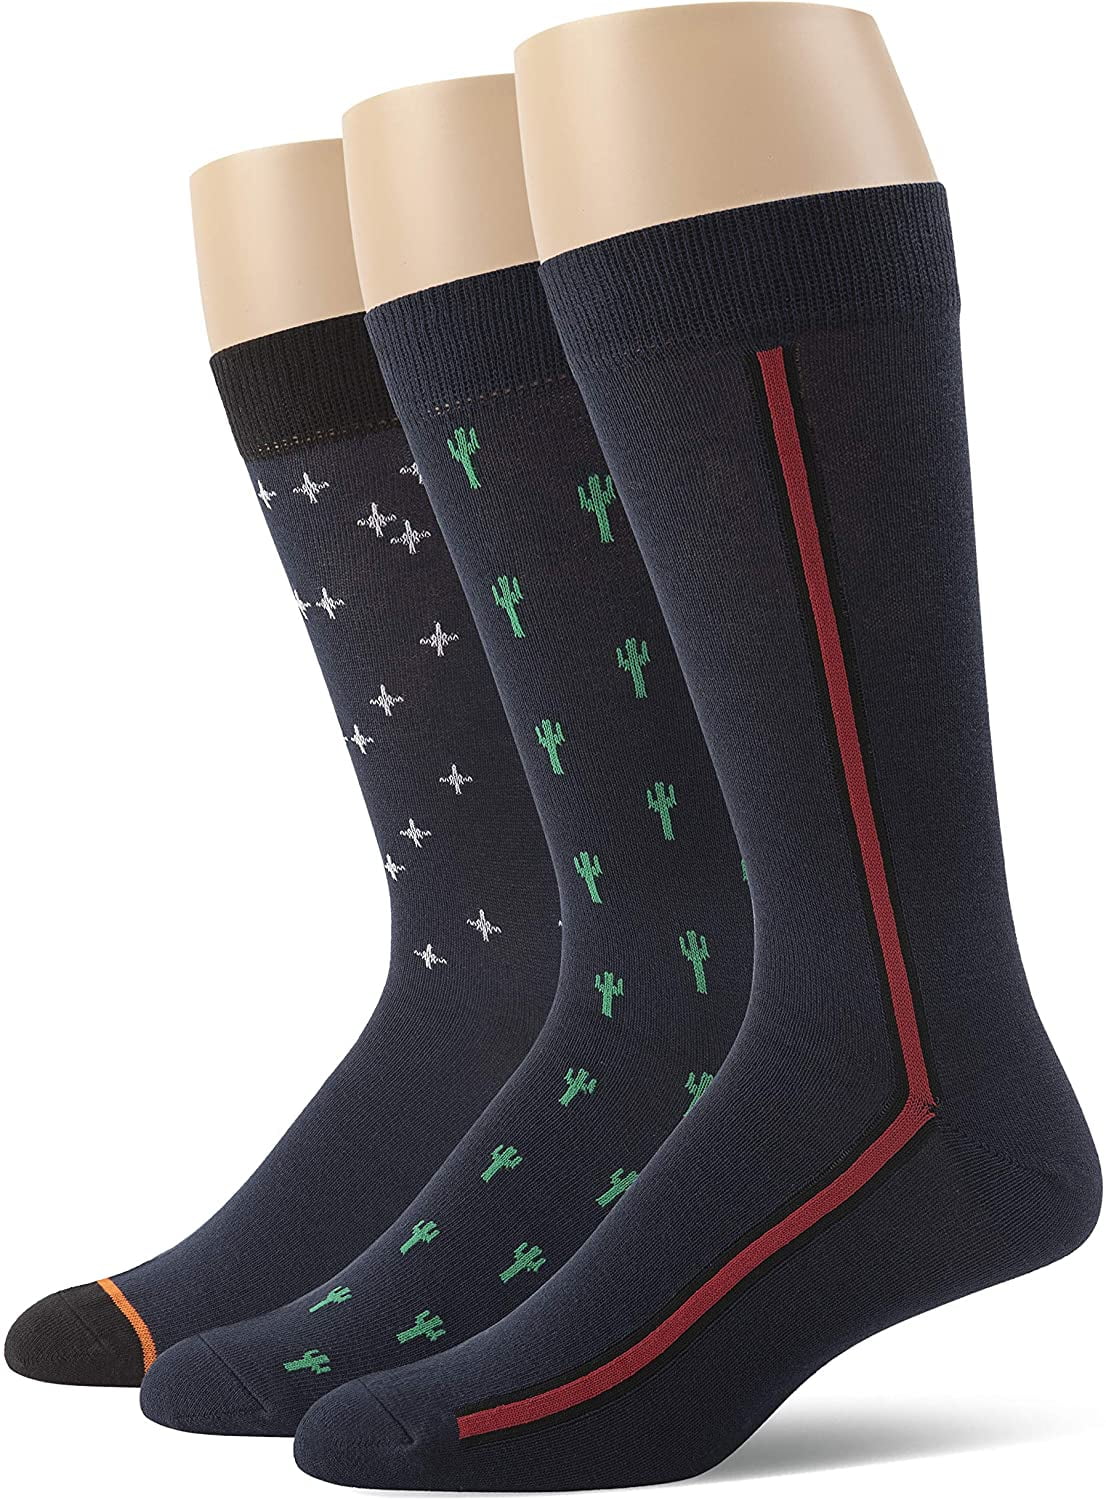 u&i Men's Dress Socks in Supima Cotton 5 Pack Crew Socks for Shoes size 7-12 